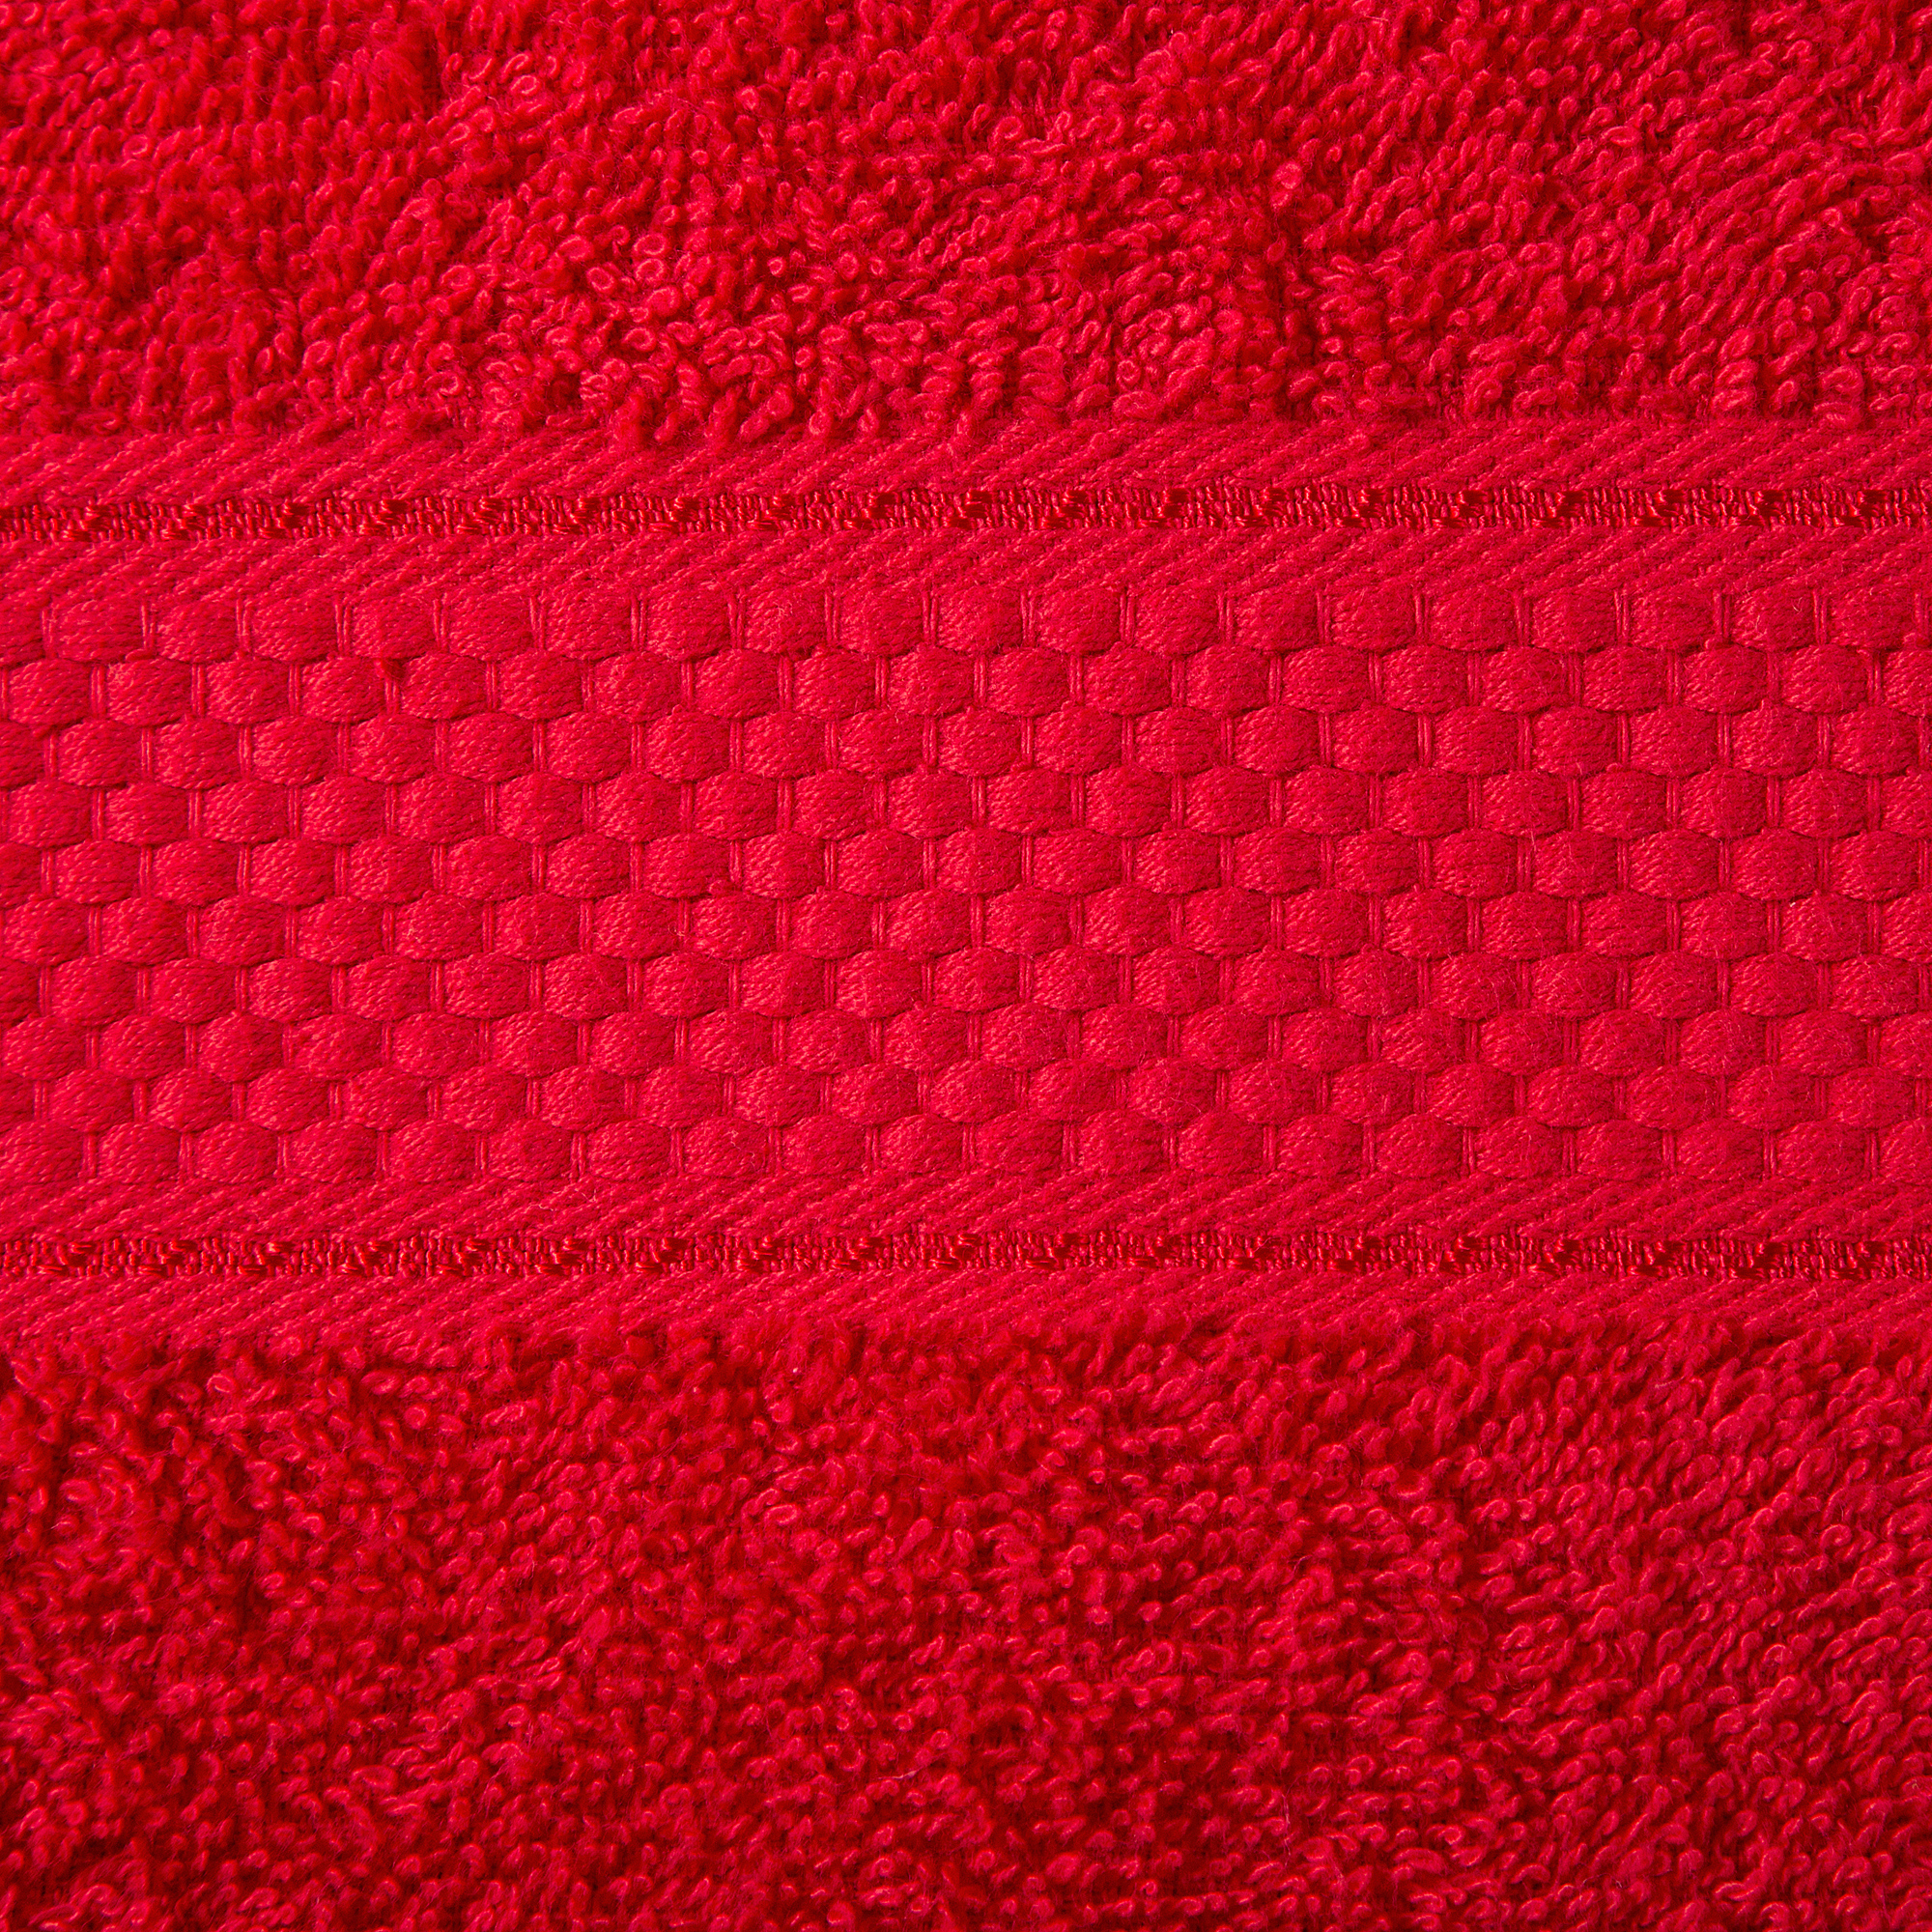 Bale Set 2pcs Red Plain Extra Large Bath Sheet Towel